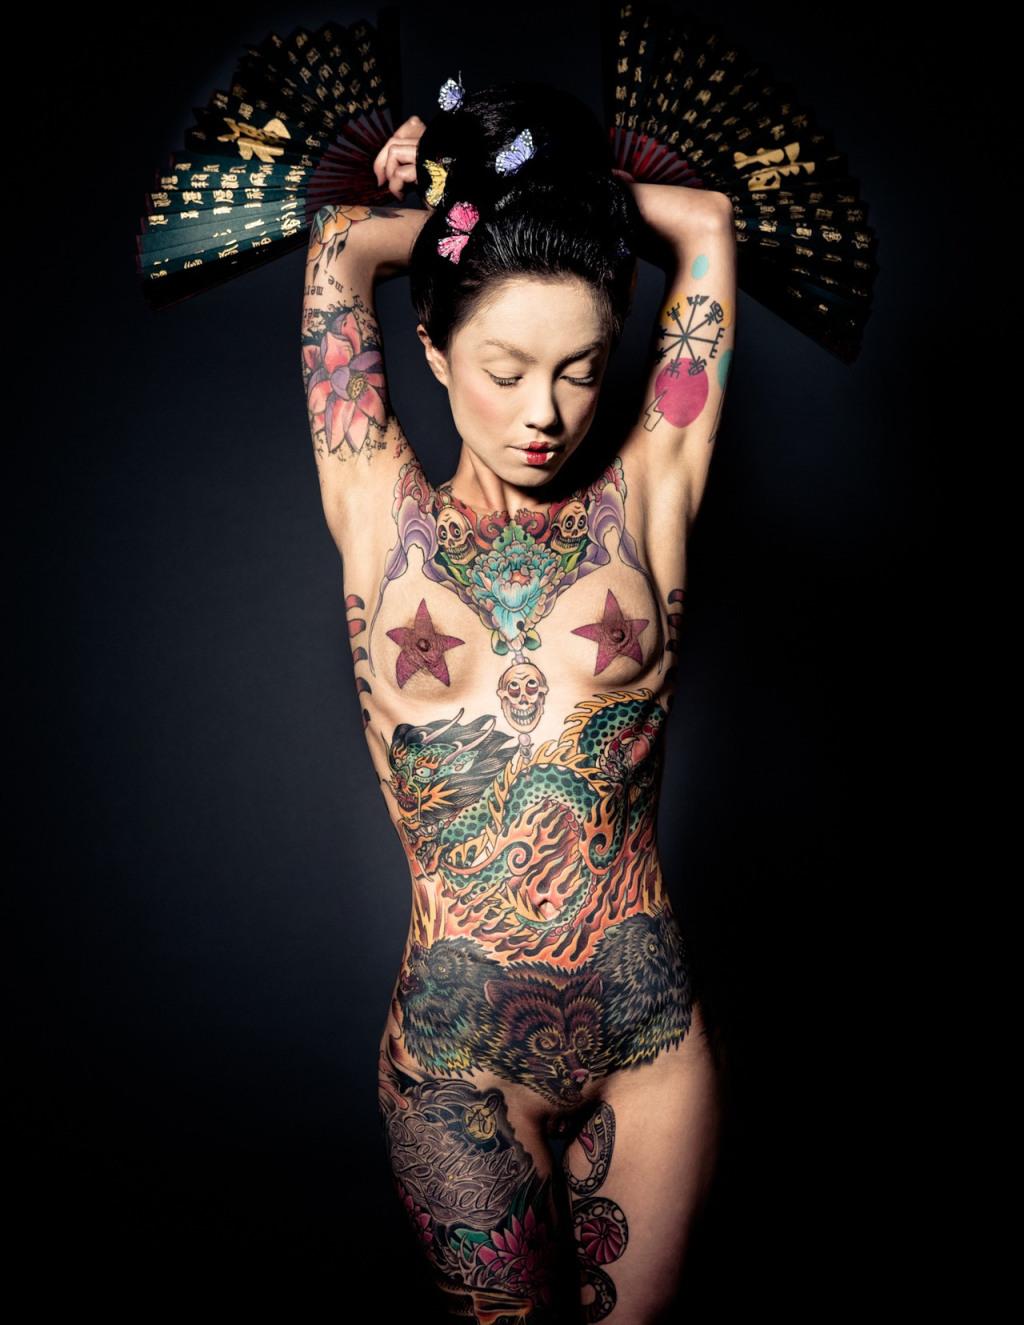 Naked Girl Have Full Body Tattoo. 